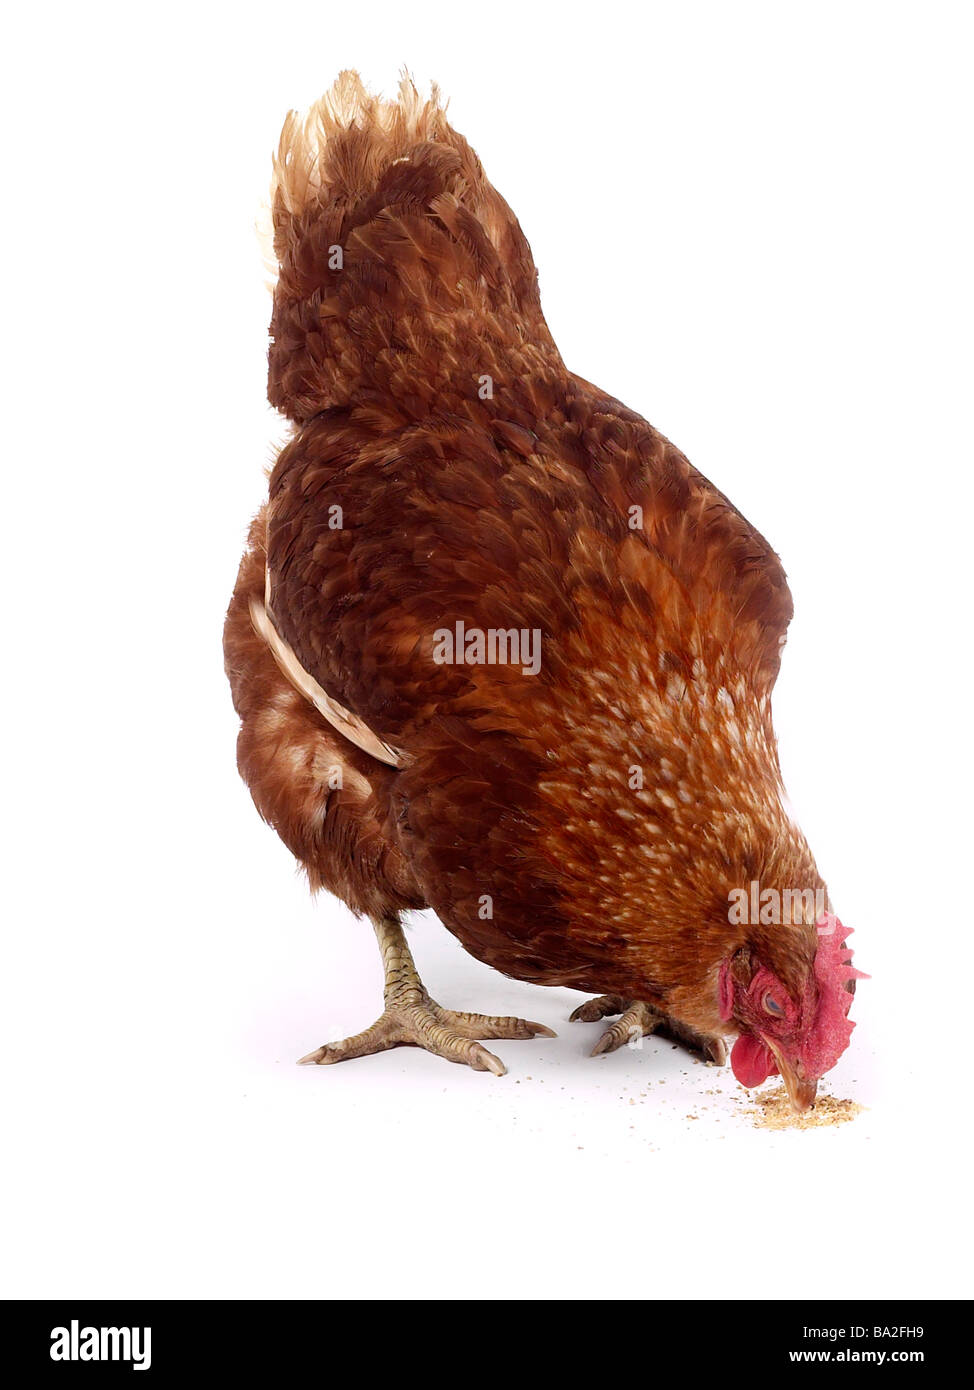 Un poulet manger chickenfeed. Banque D'Images